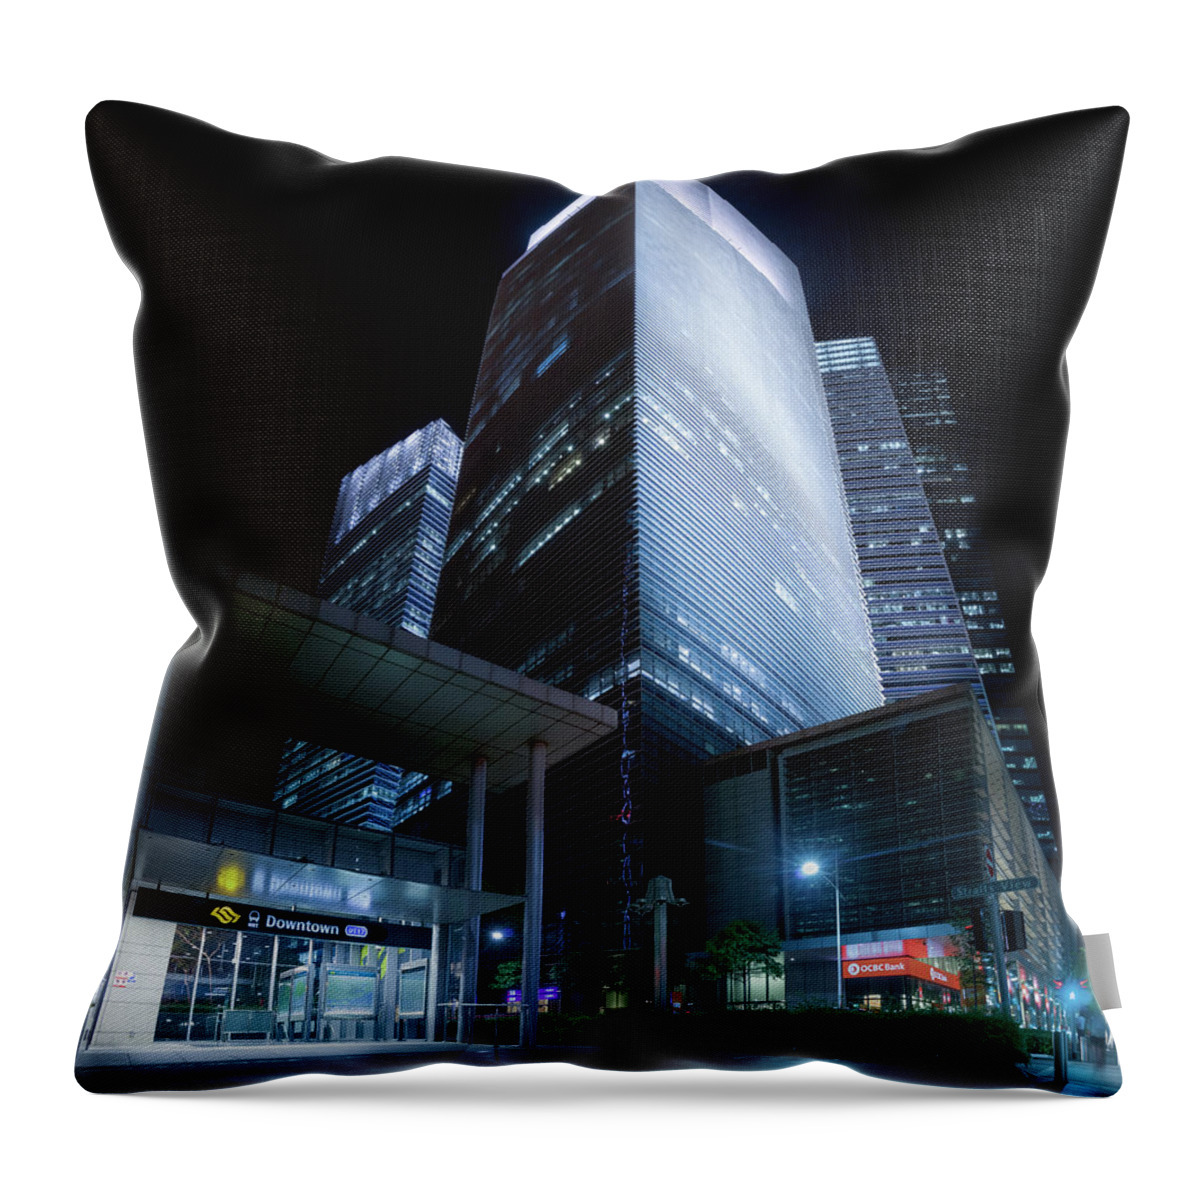 Night Throw Pillow featuring the photograph Marina Bay Financial Centre by Rick Deacon